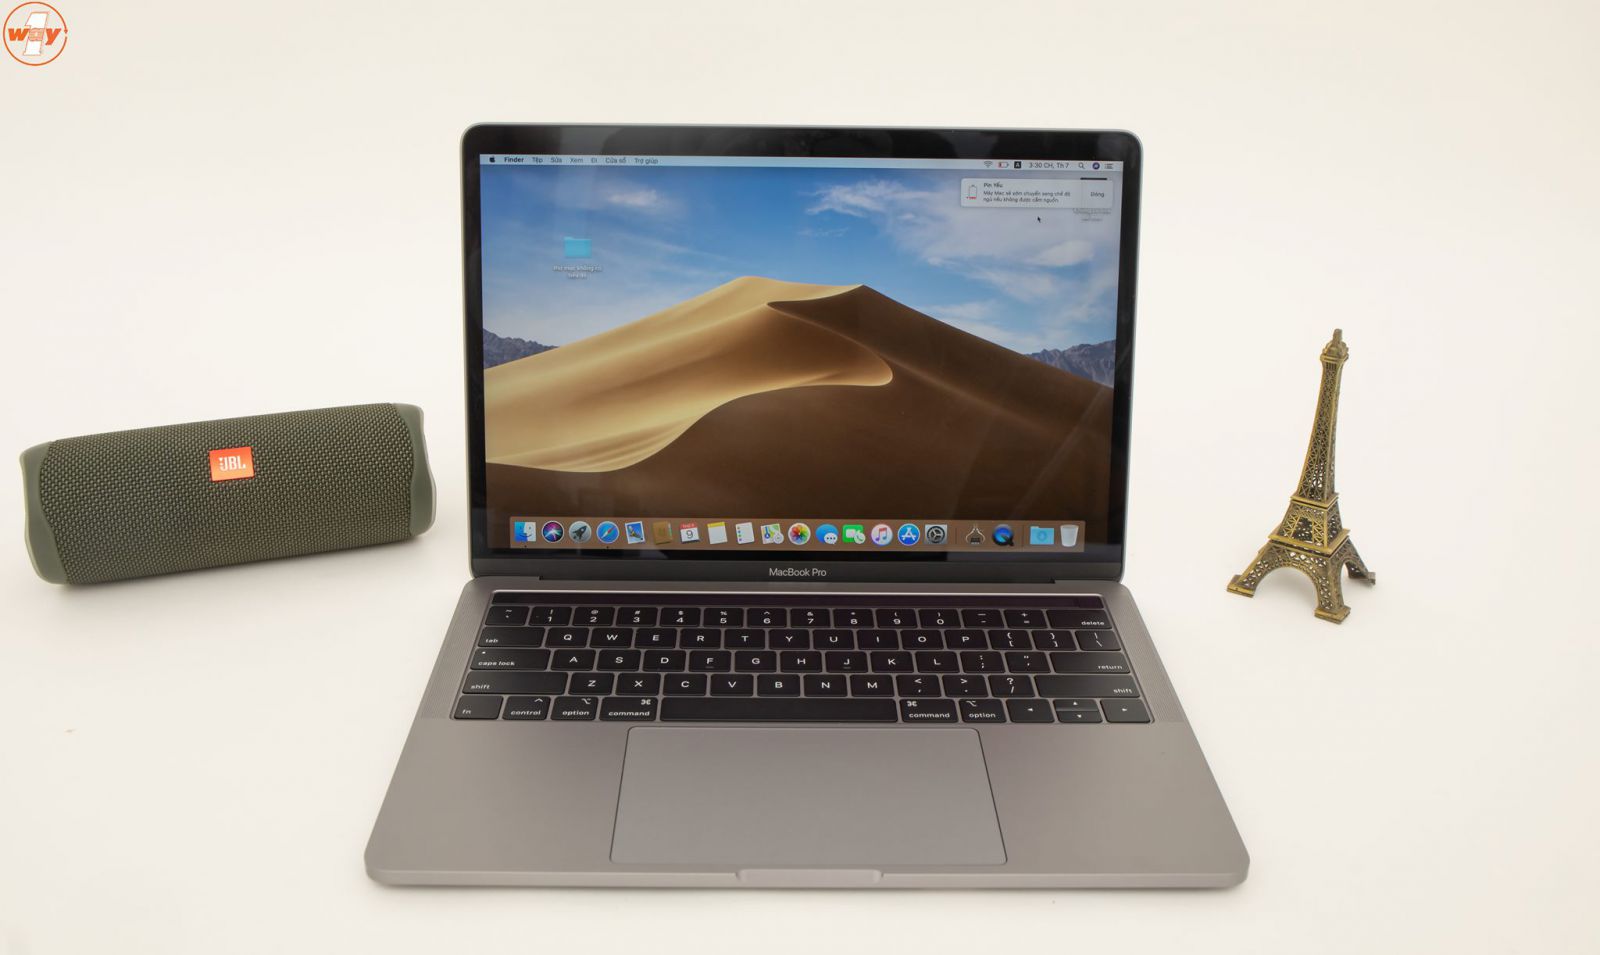 MacBook Pro 2019 - 13 inch - 256GB - MV962 cũ bạc